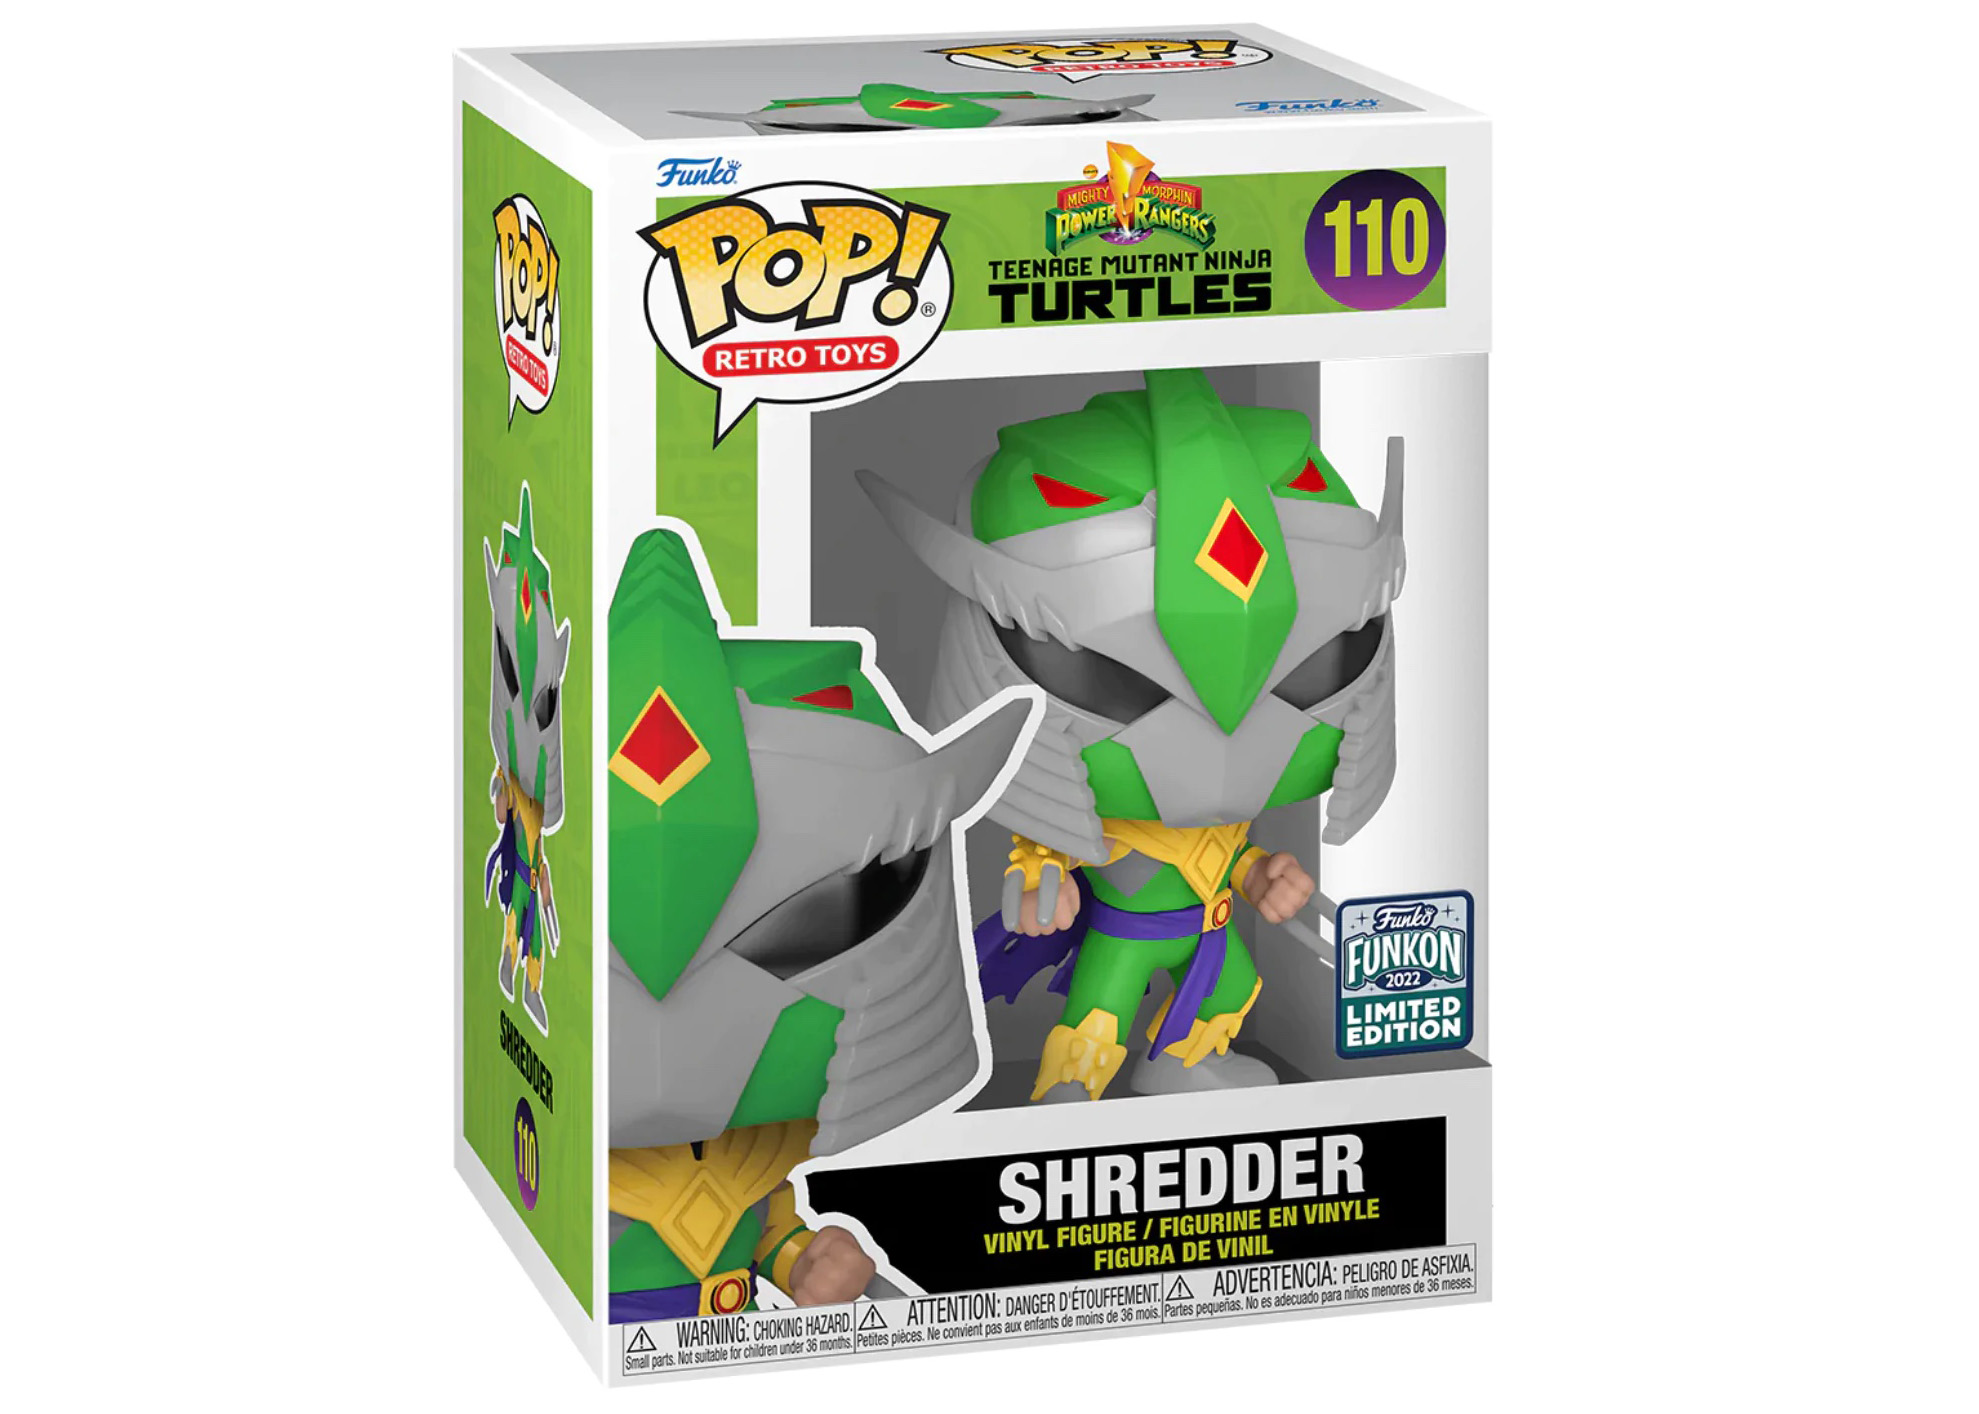 Funko Pop! Retro Toys Power Rangers x Teenage Mutant Ninja Turtles Shredder  2022 Funkon Exclusive Figure #110